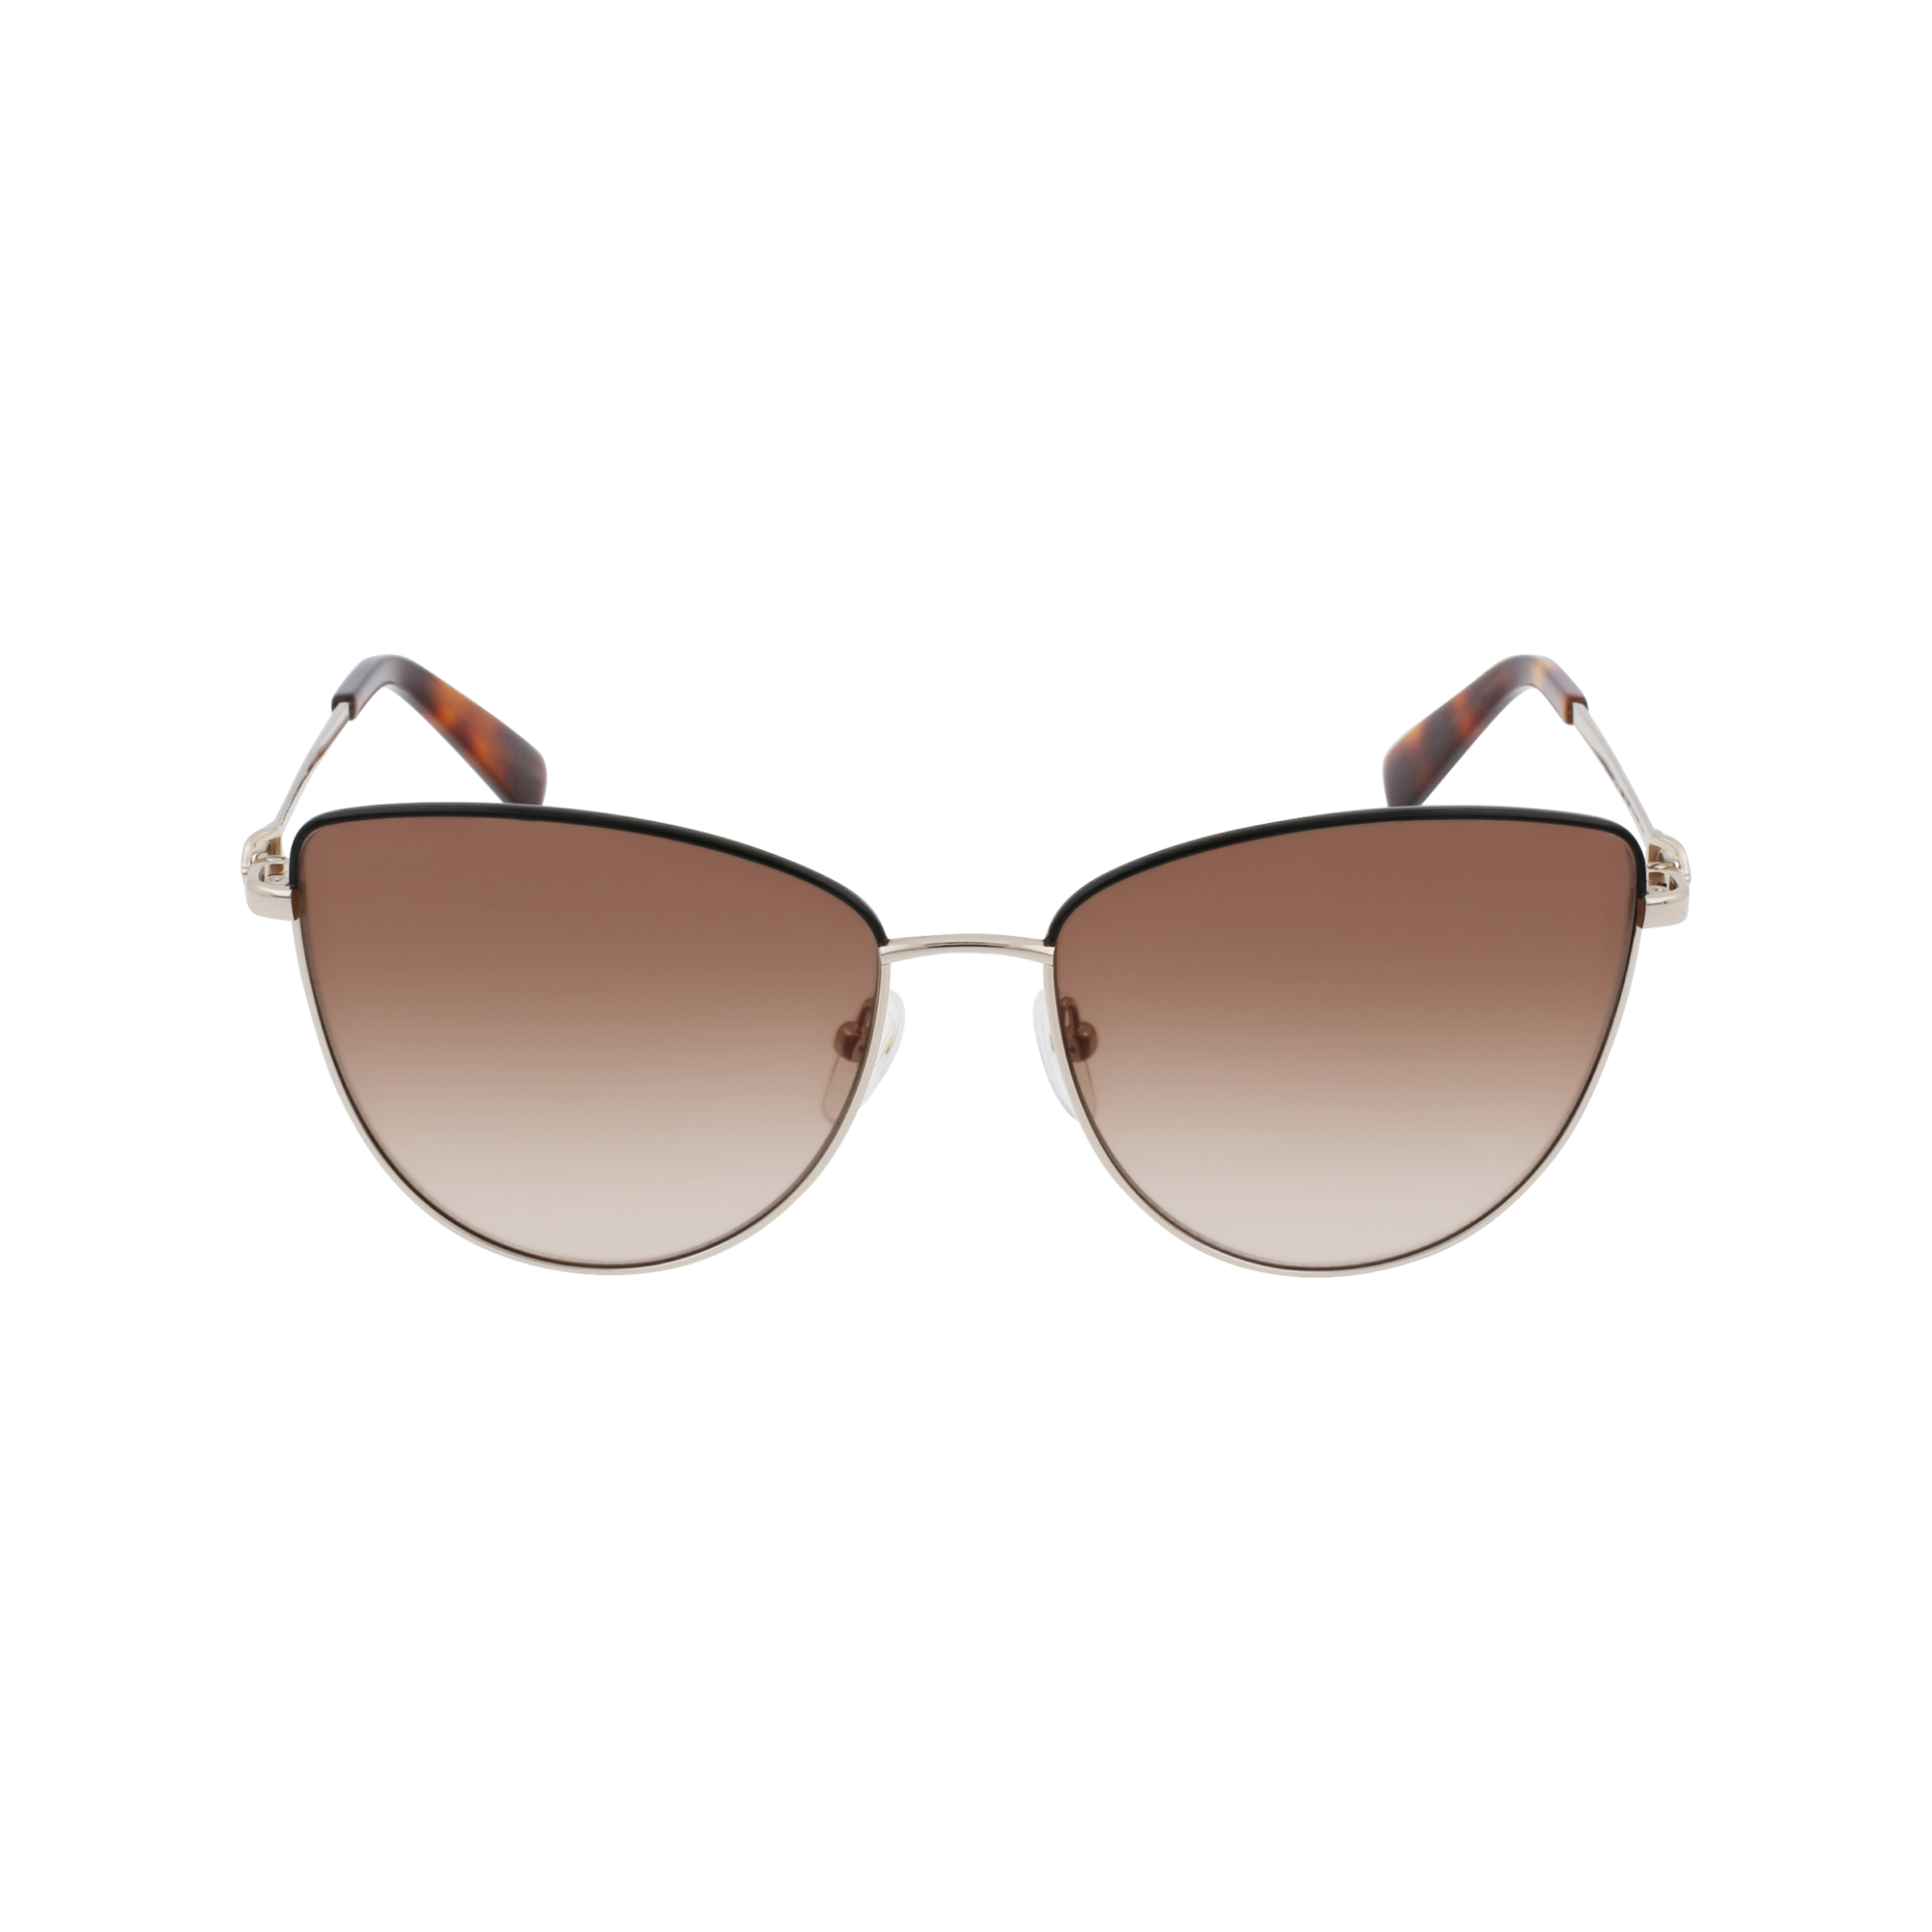 longchamp sunglasses price